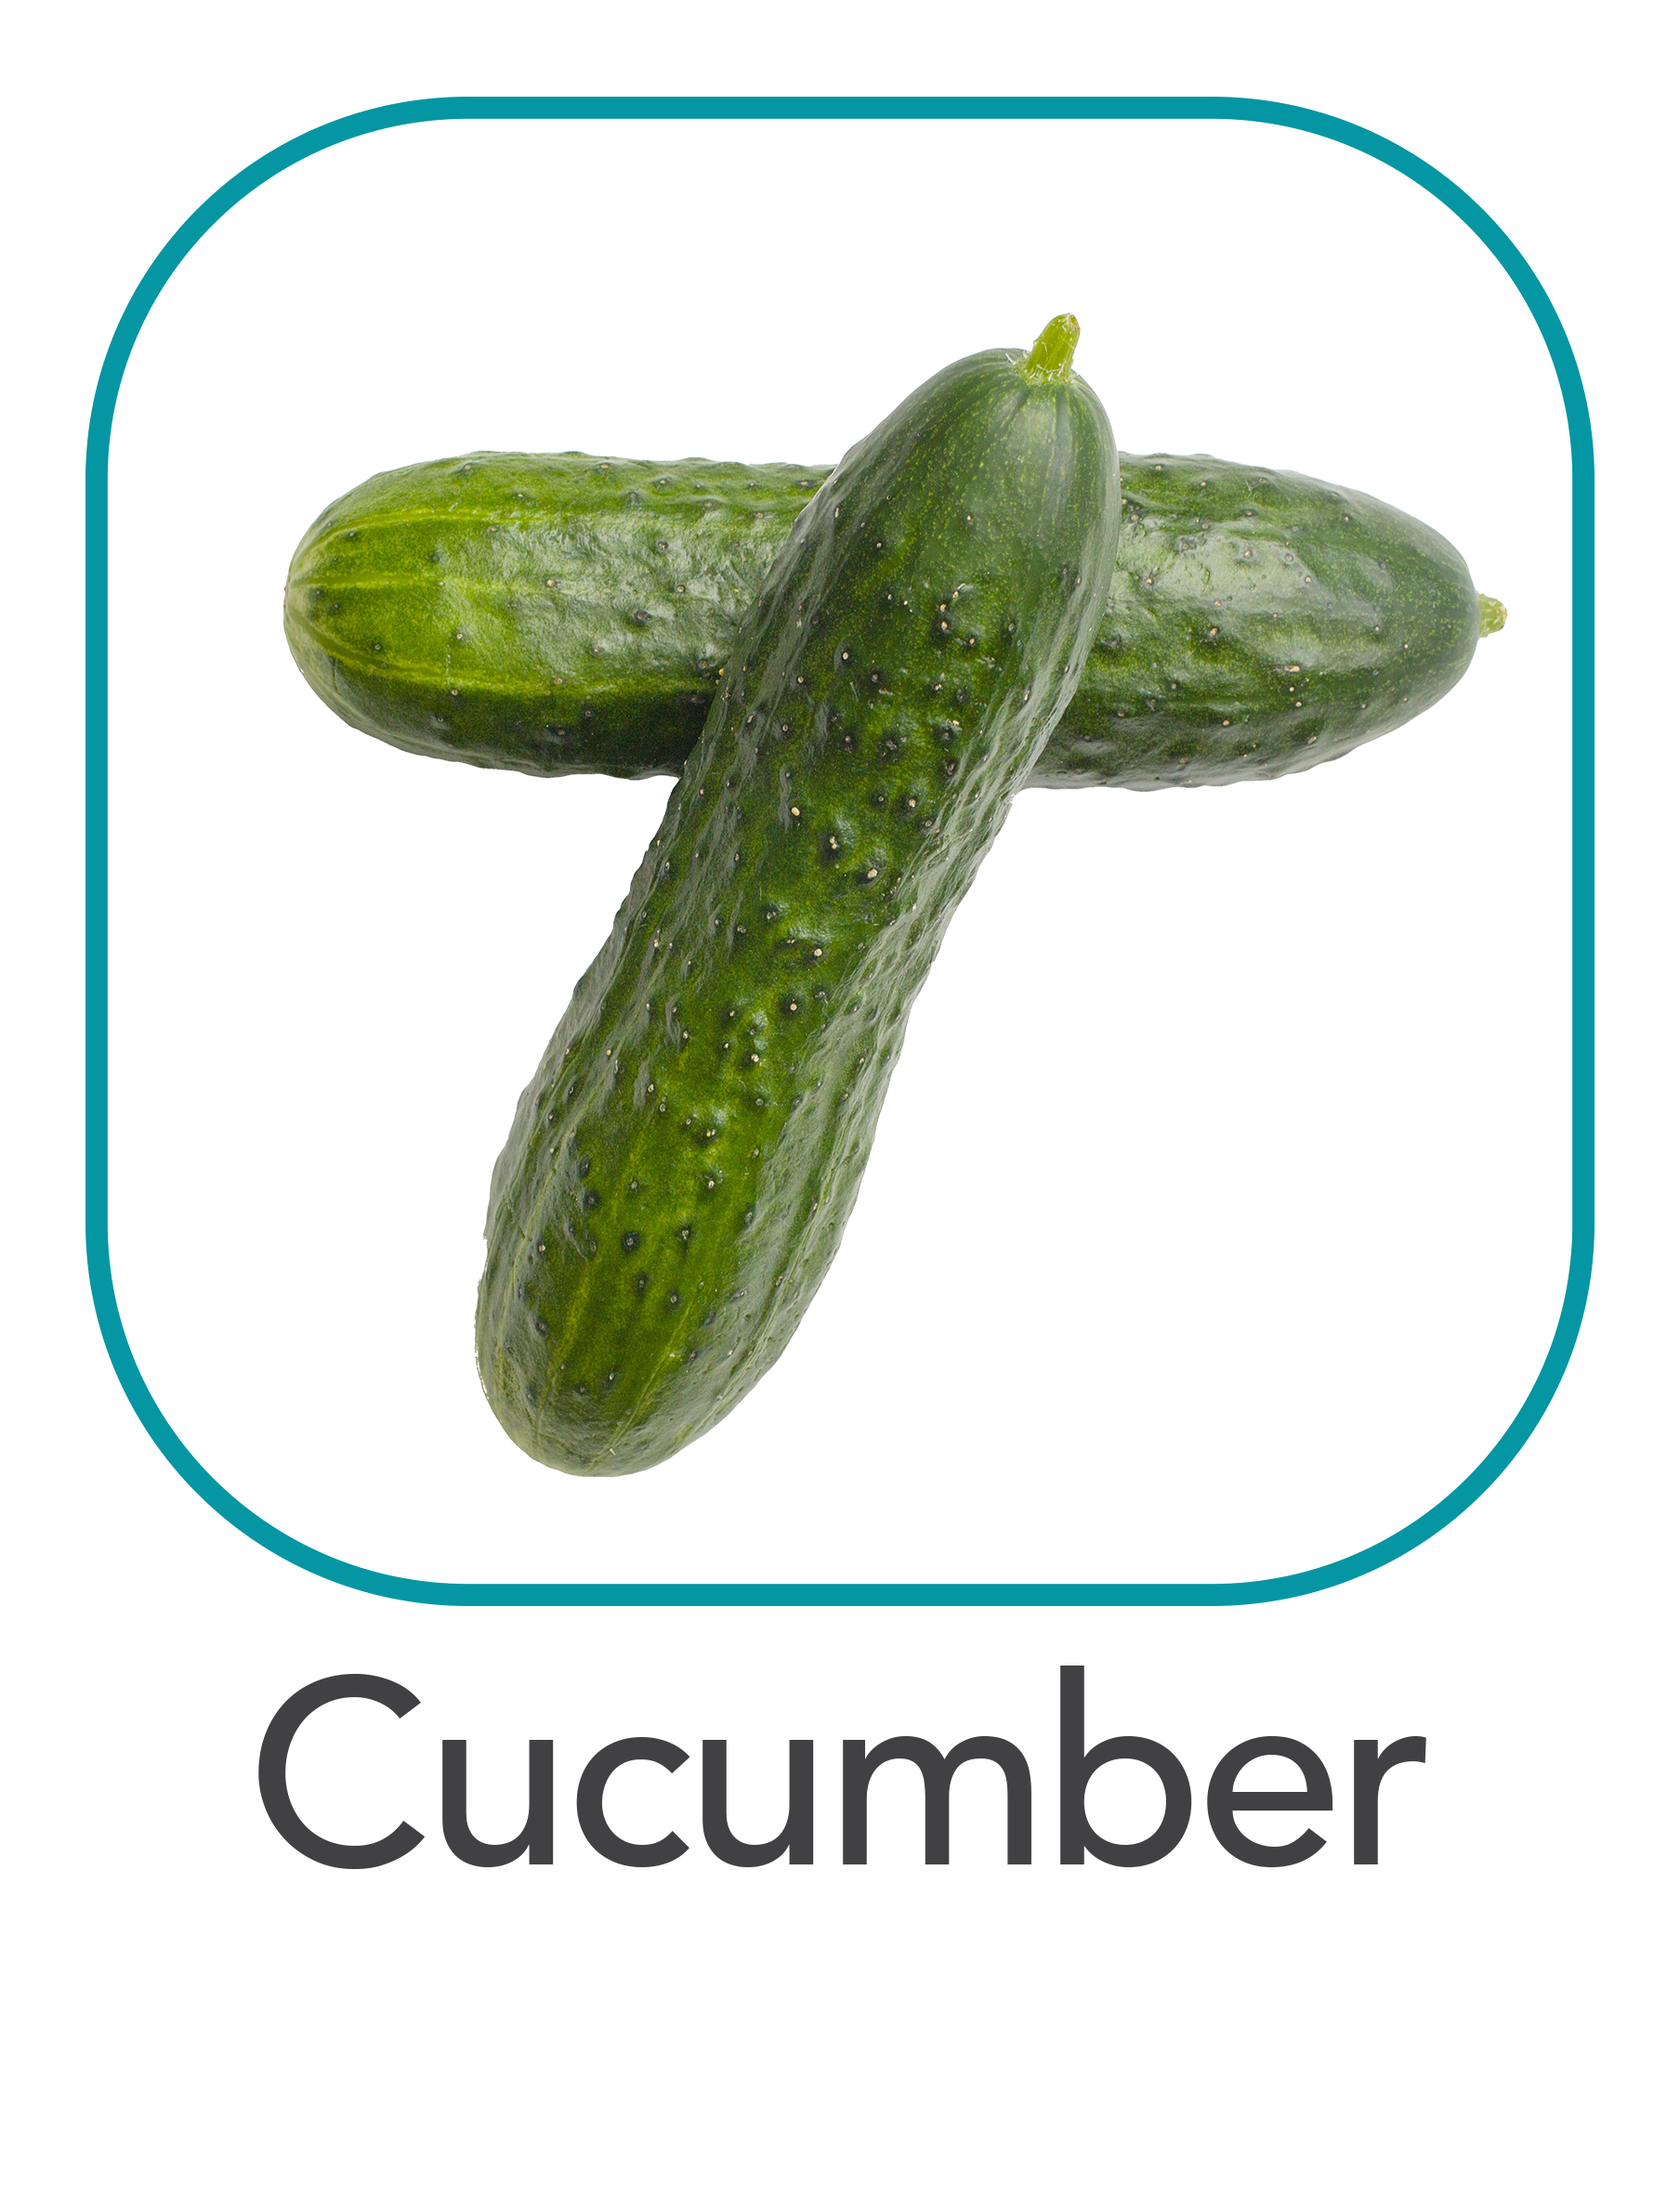 cucumber_web.png